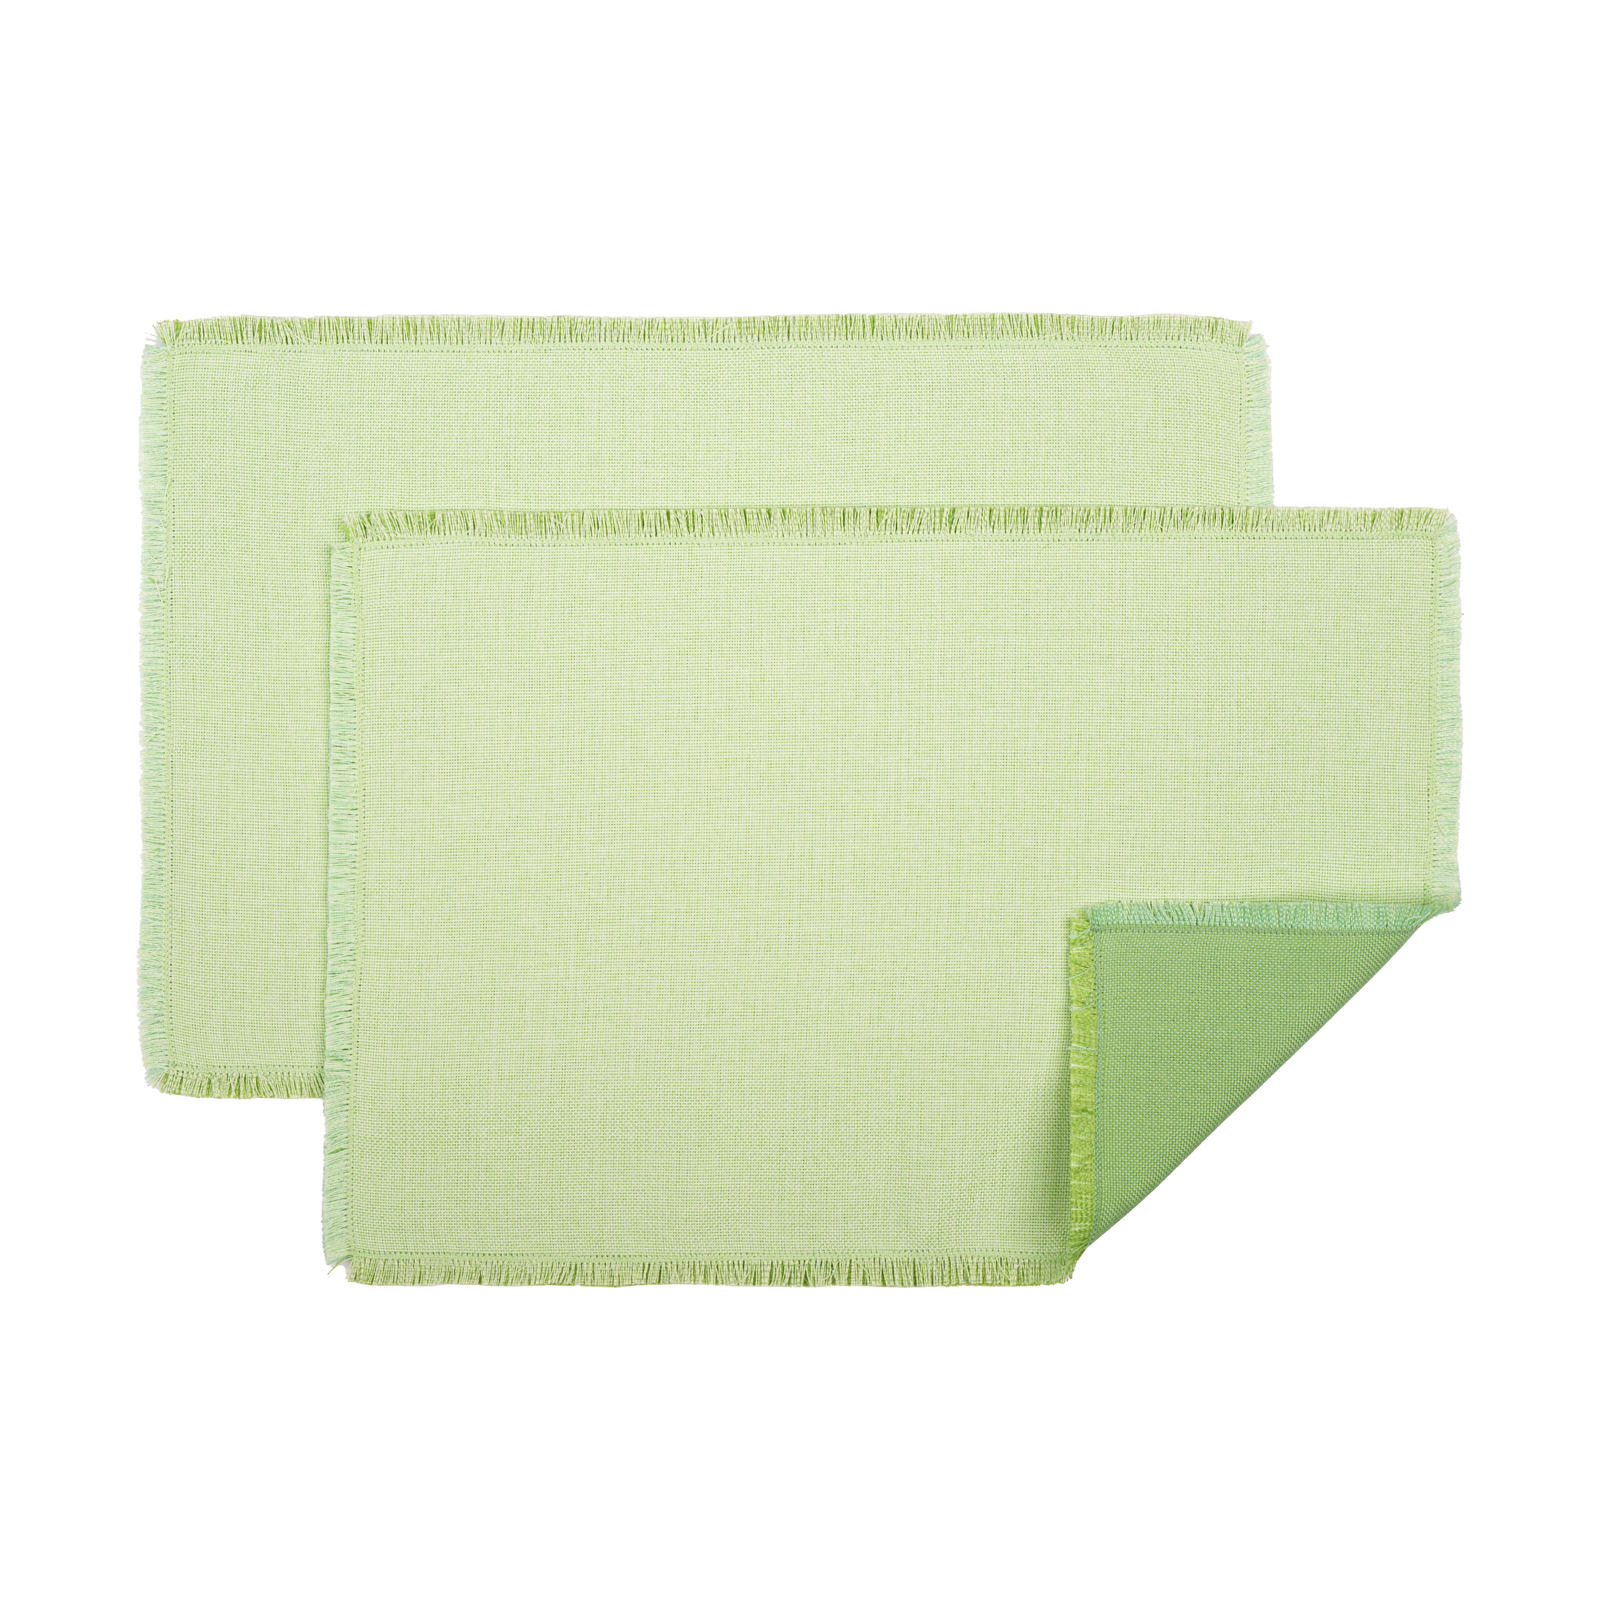 Größe: 33x 48 cm Farbe: grasgrün/limette #farbe_grasgrün/limette